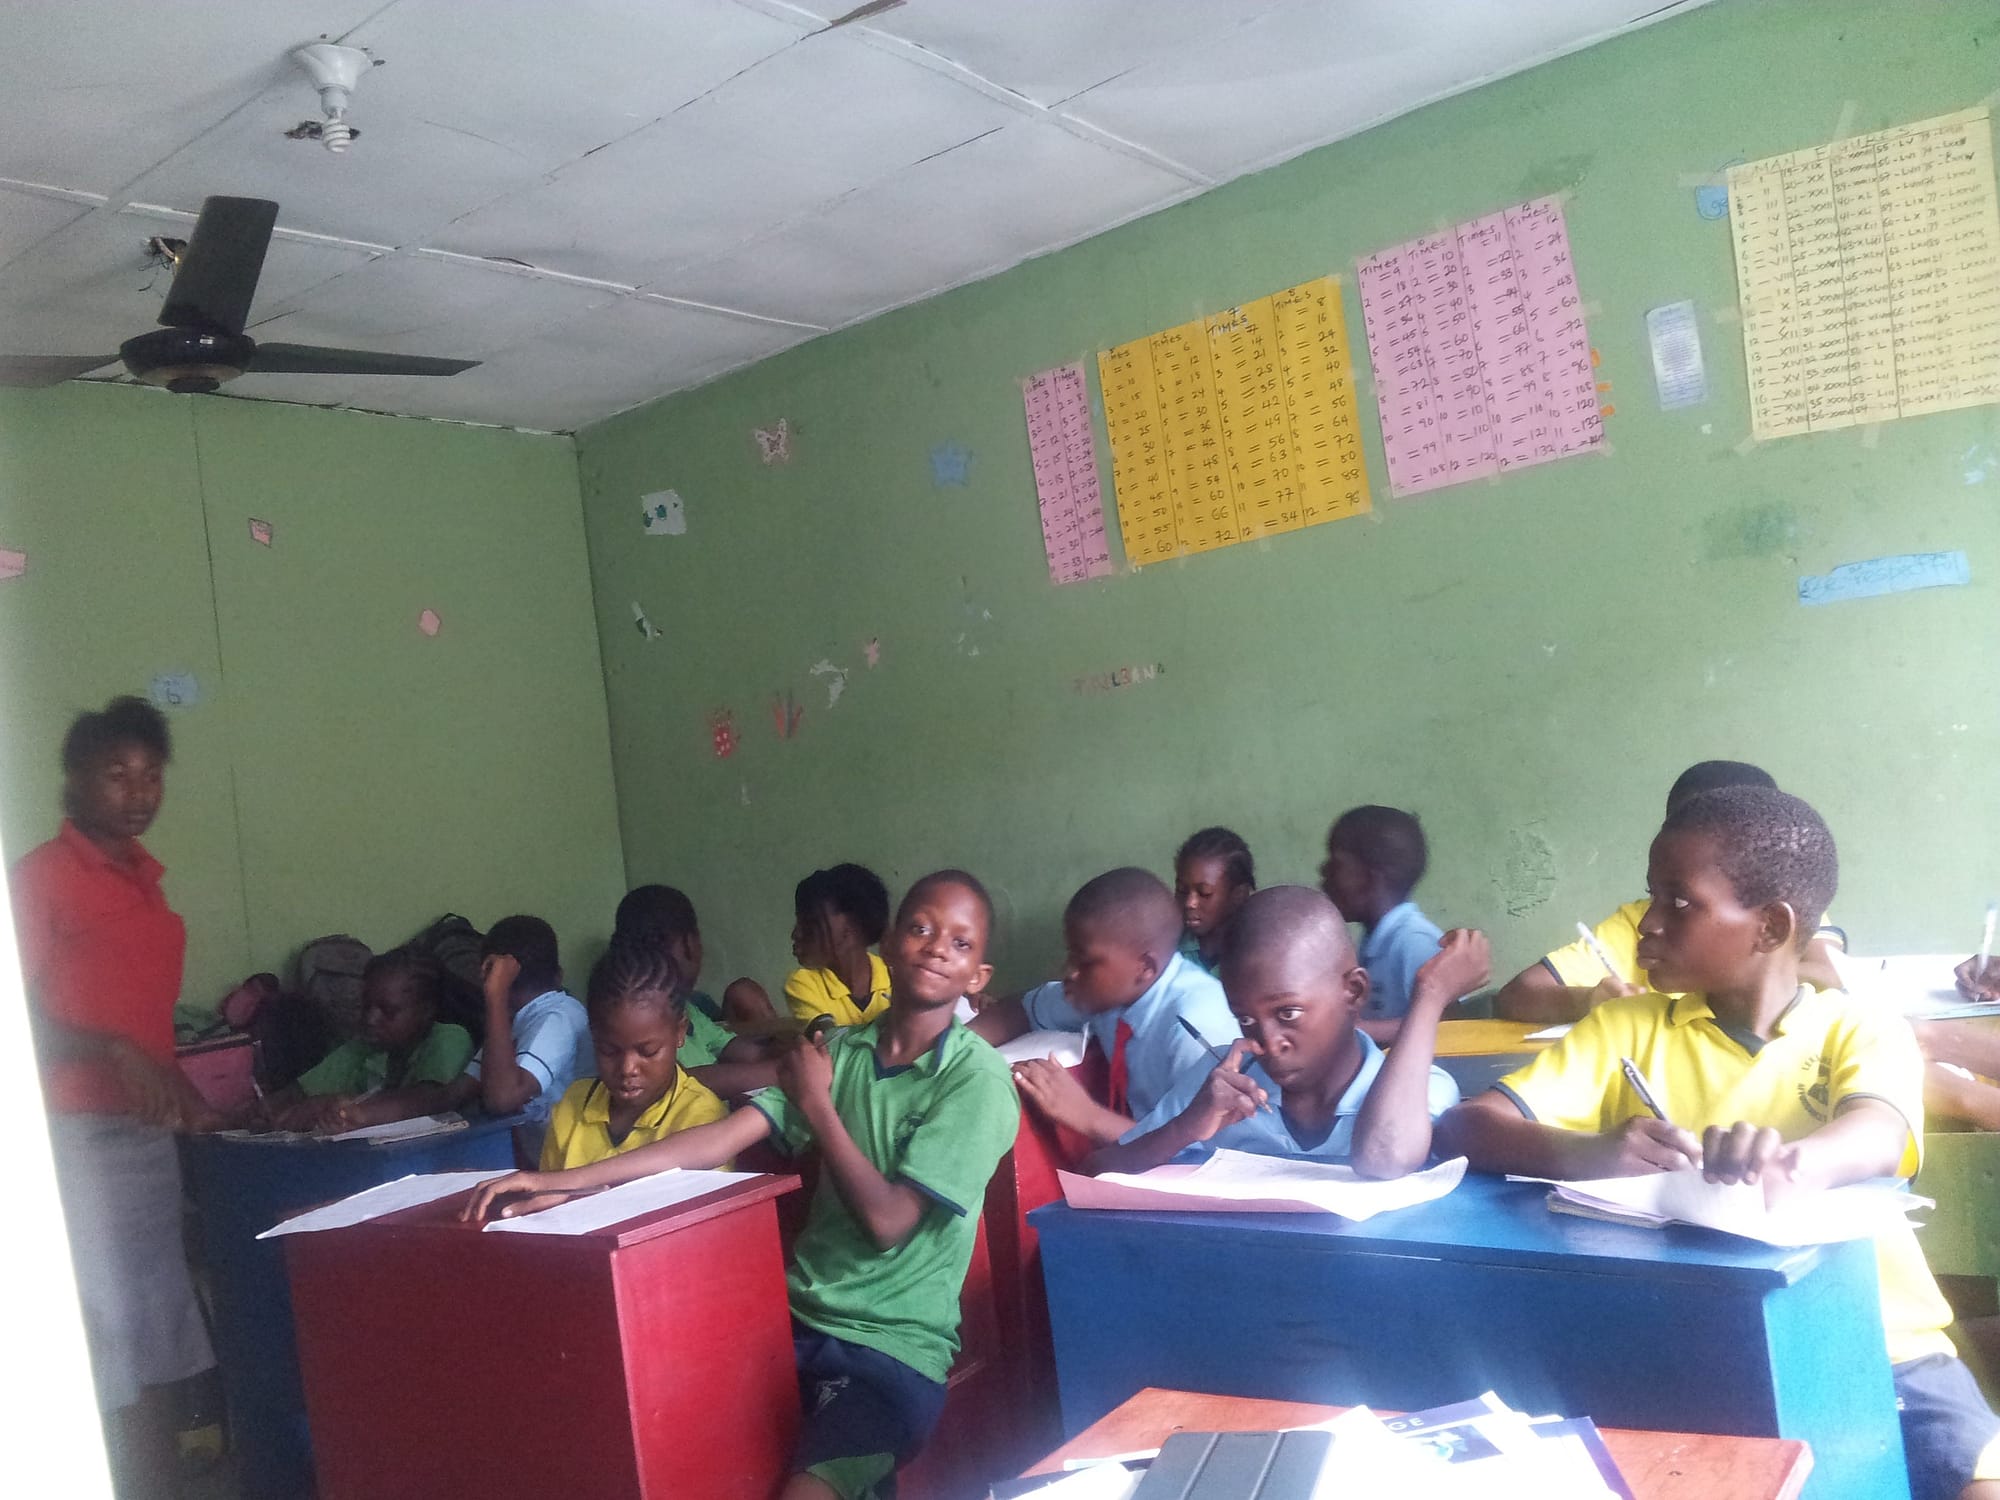 Students studying in the Lekki School classroom.